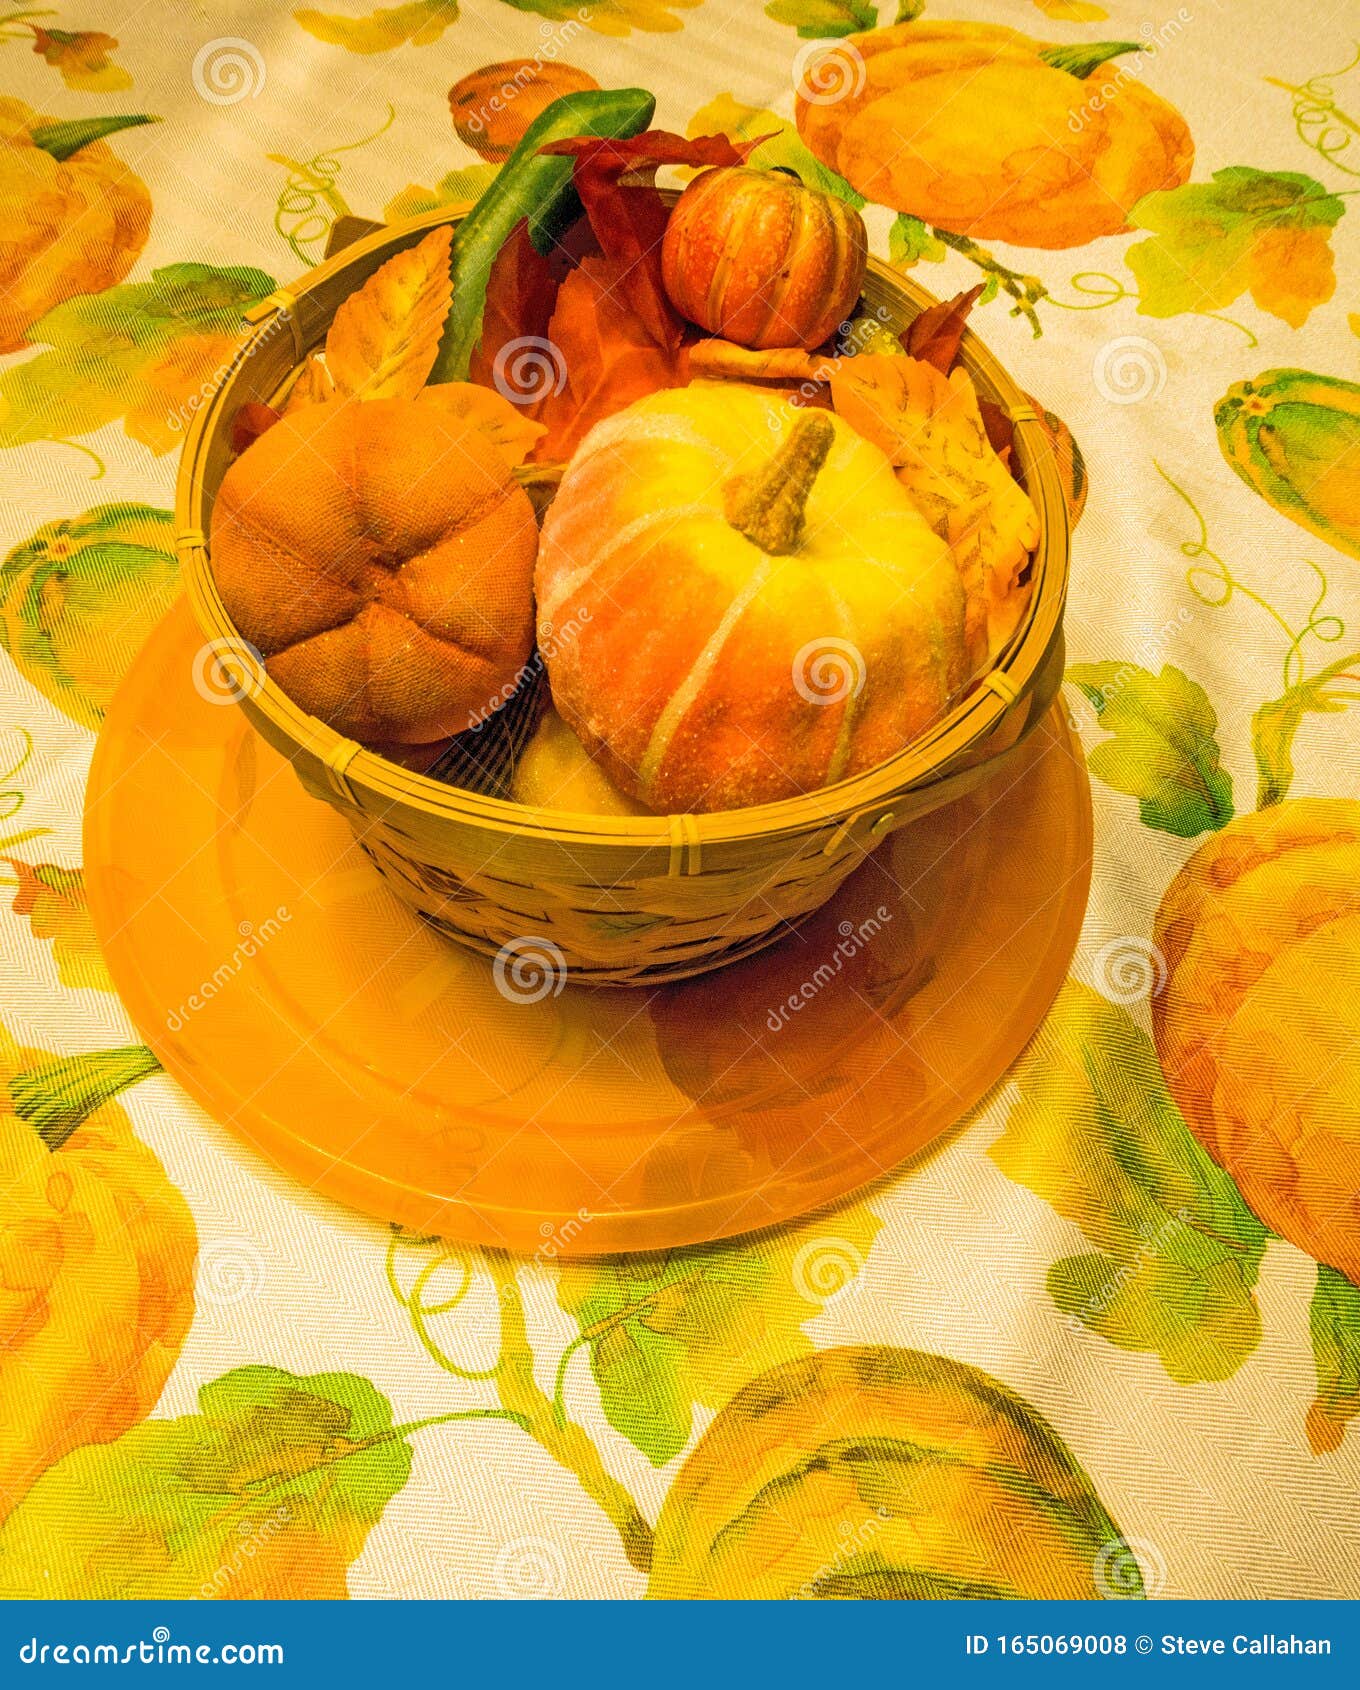 Thanksgiving Season Decorations on Autumn Tablecloth Stock Photo ...